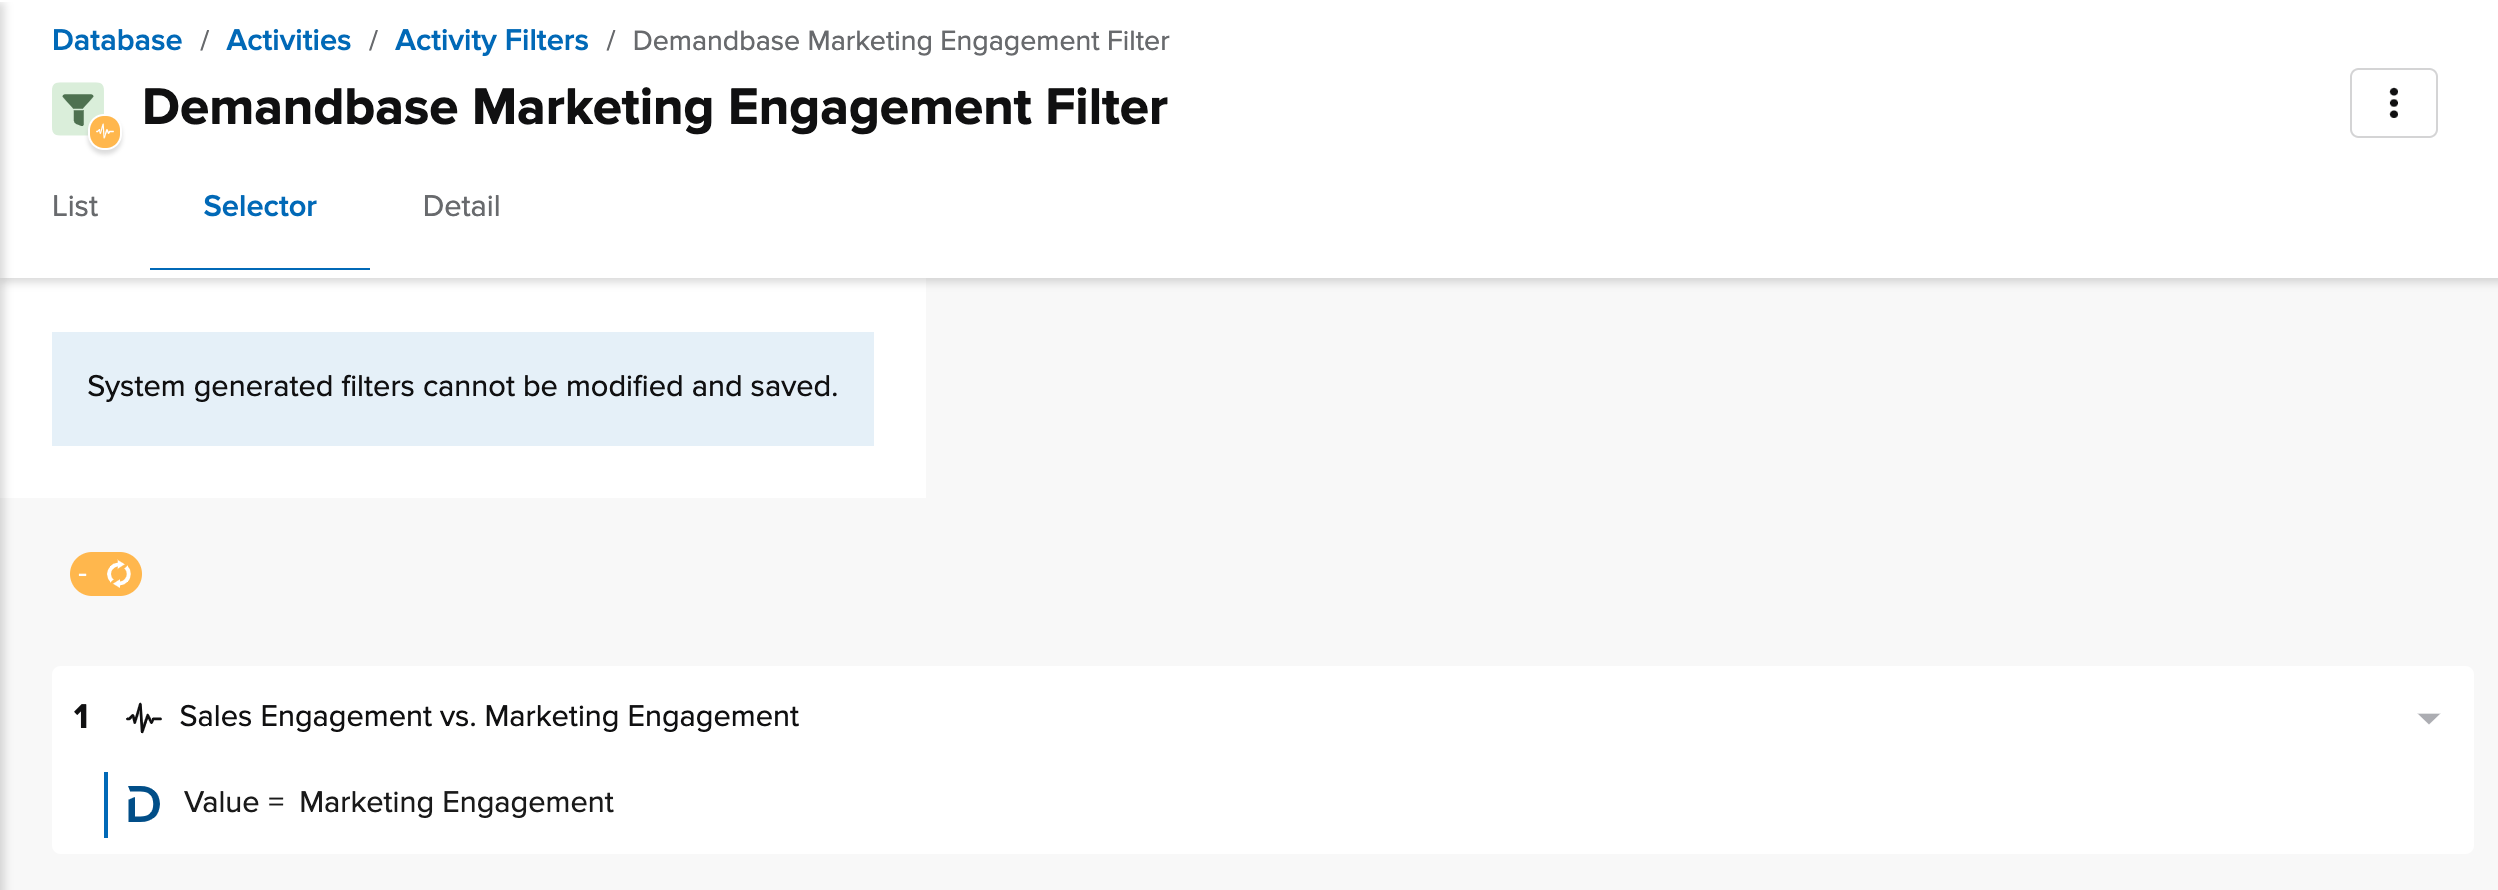 Demandbase_Marketing_Engagement_Filter.png